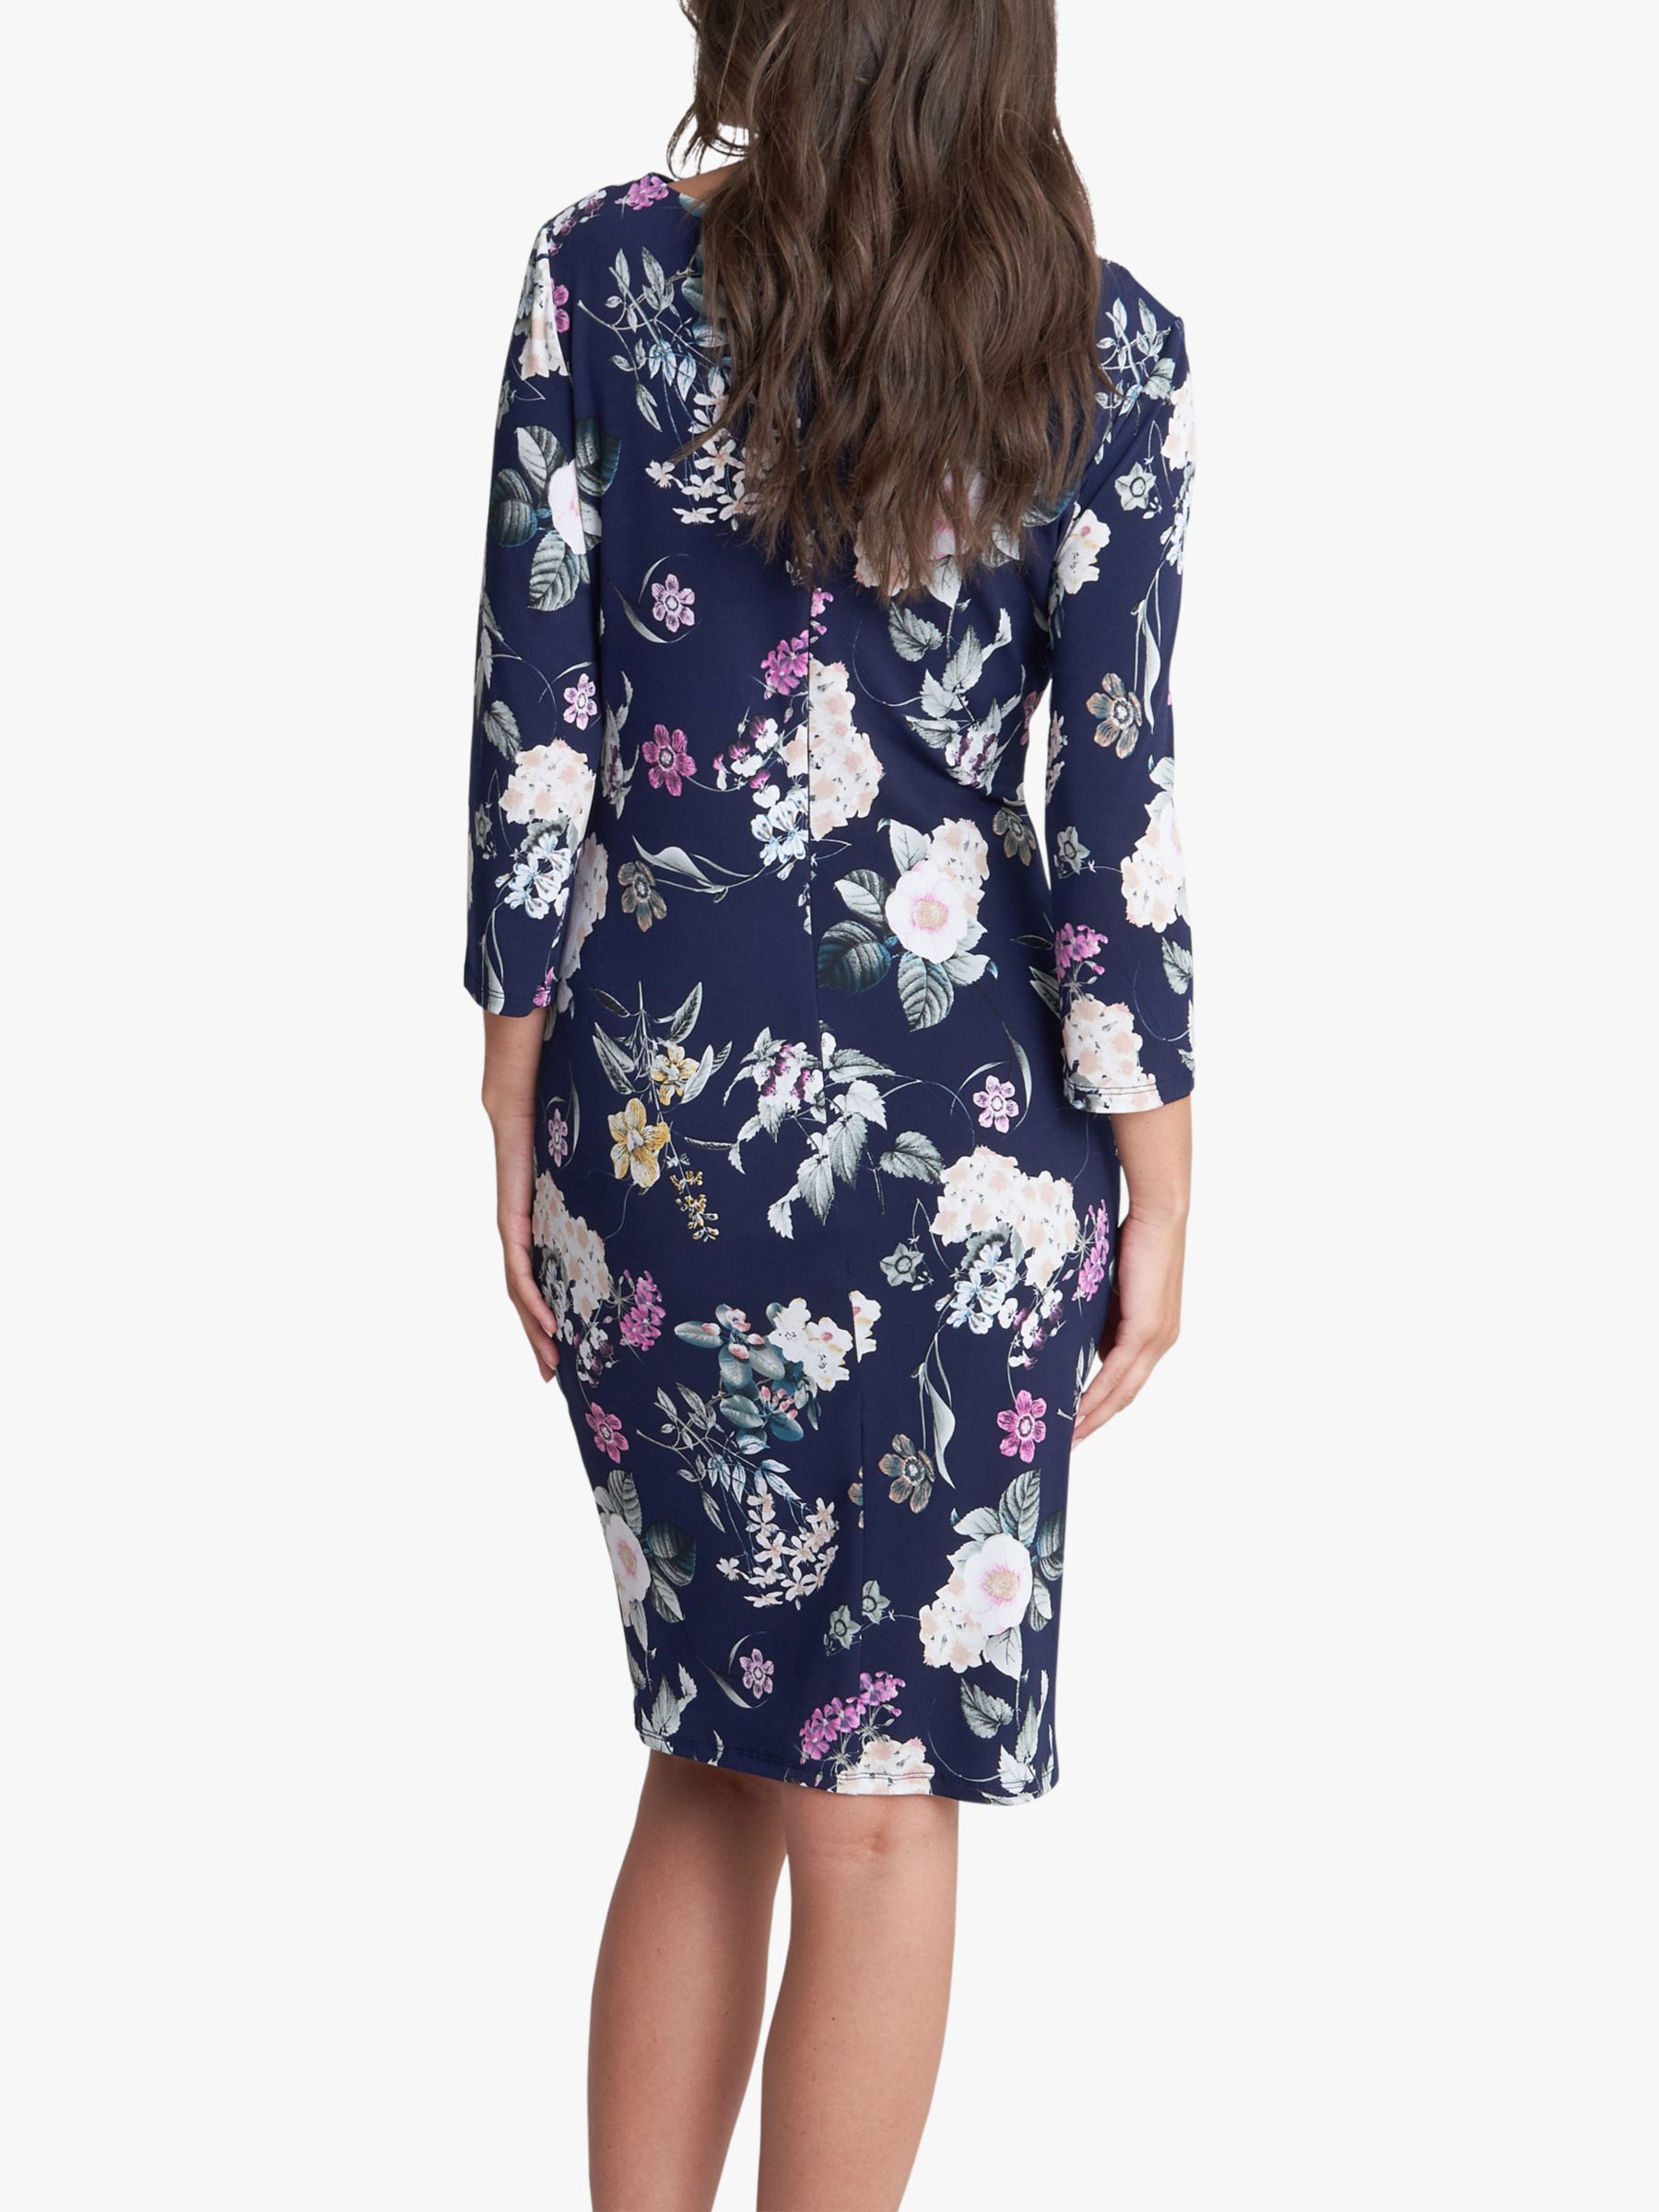 Gina Bacconi Aliya Floral Print Jersey Dress, Navy, 20